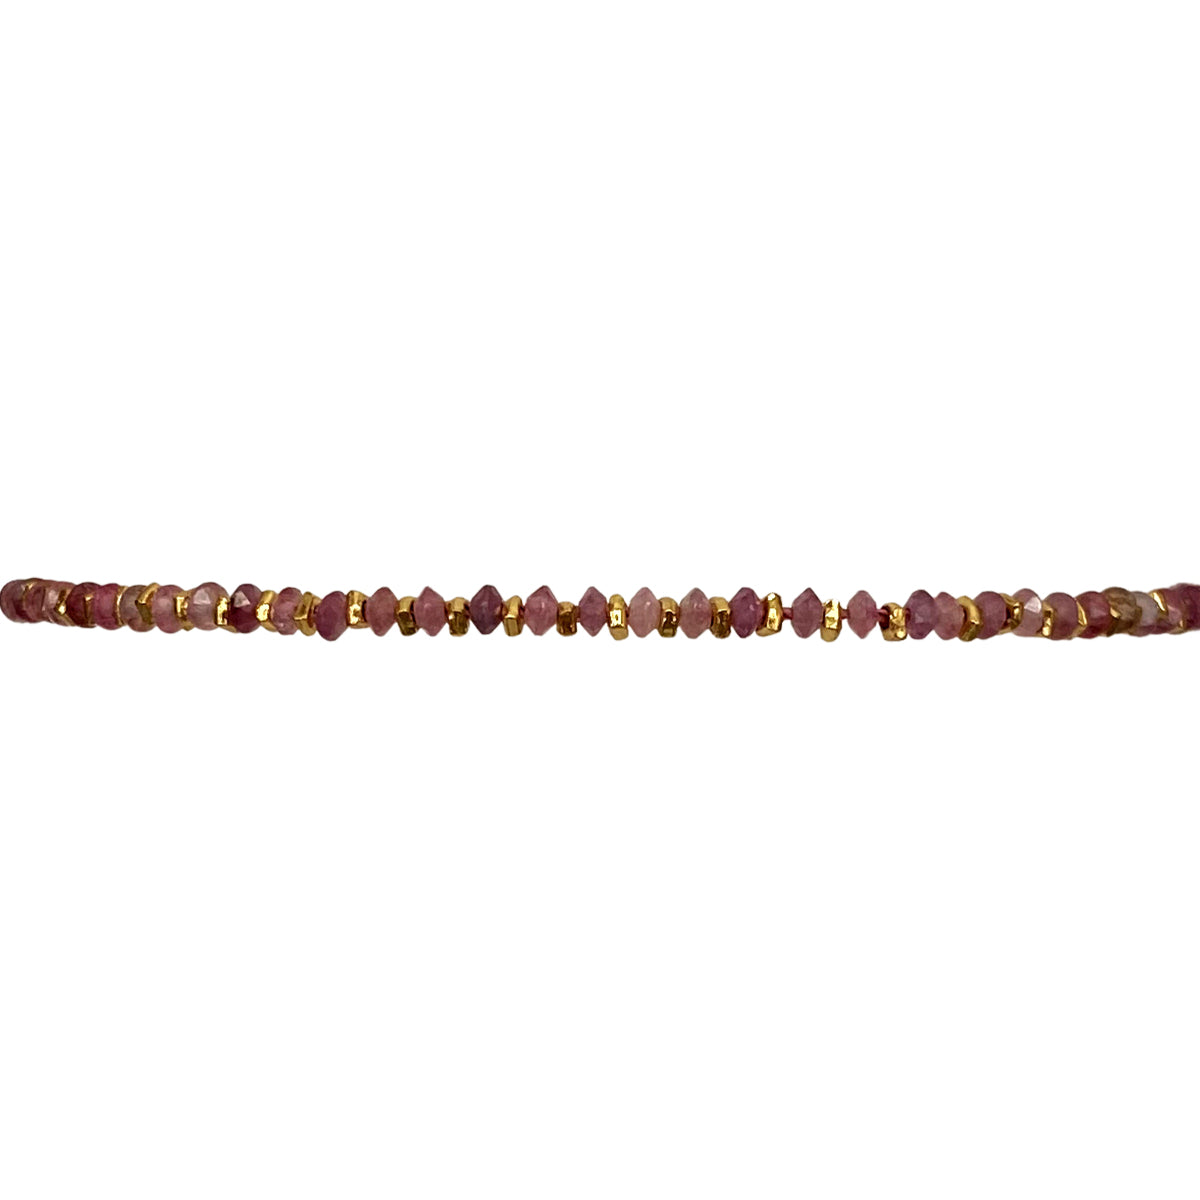 Handmade Violet Women's Bracelet Featuring Gold and Tourmaline Stones